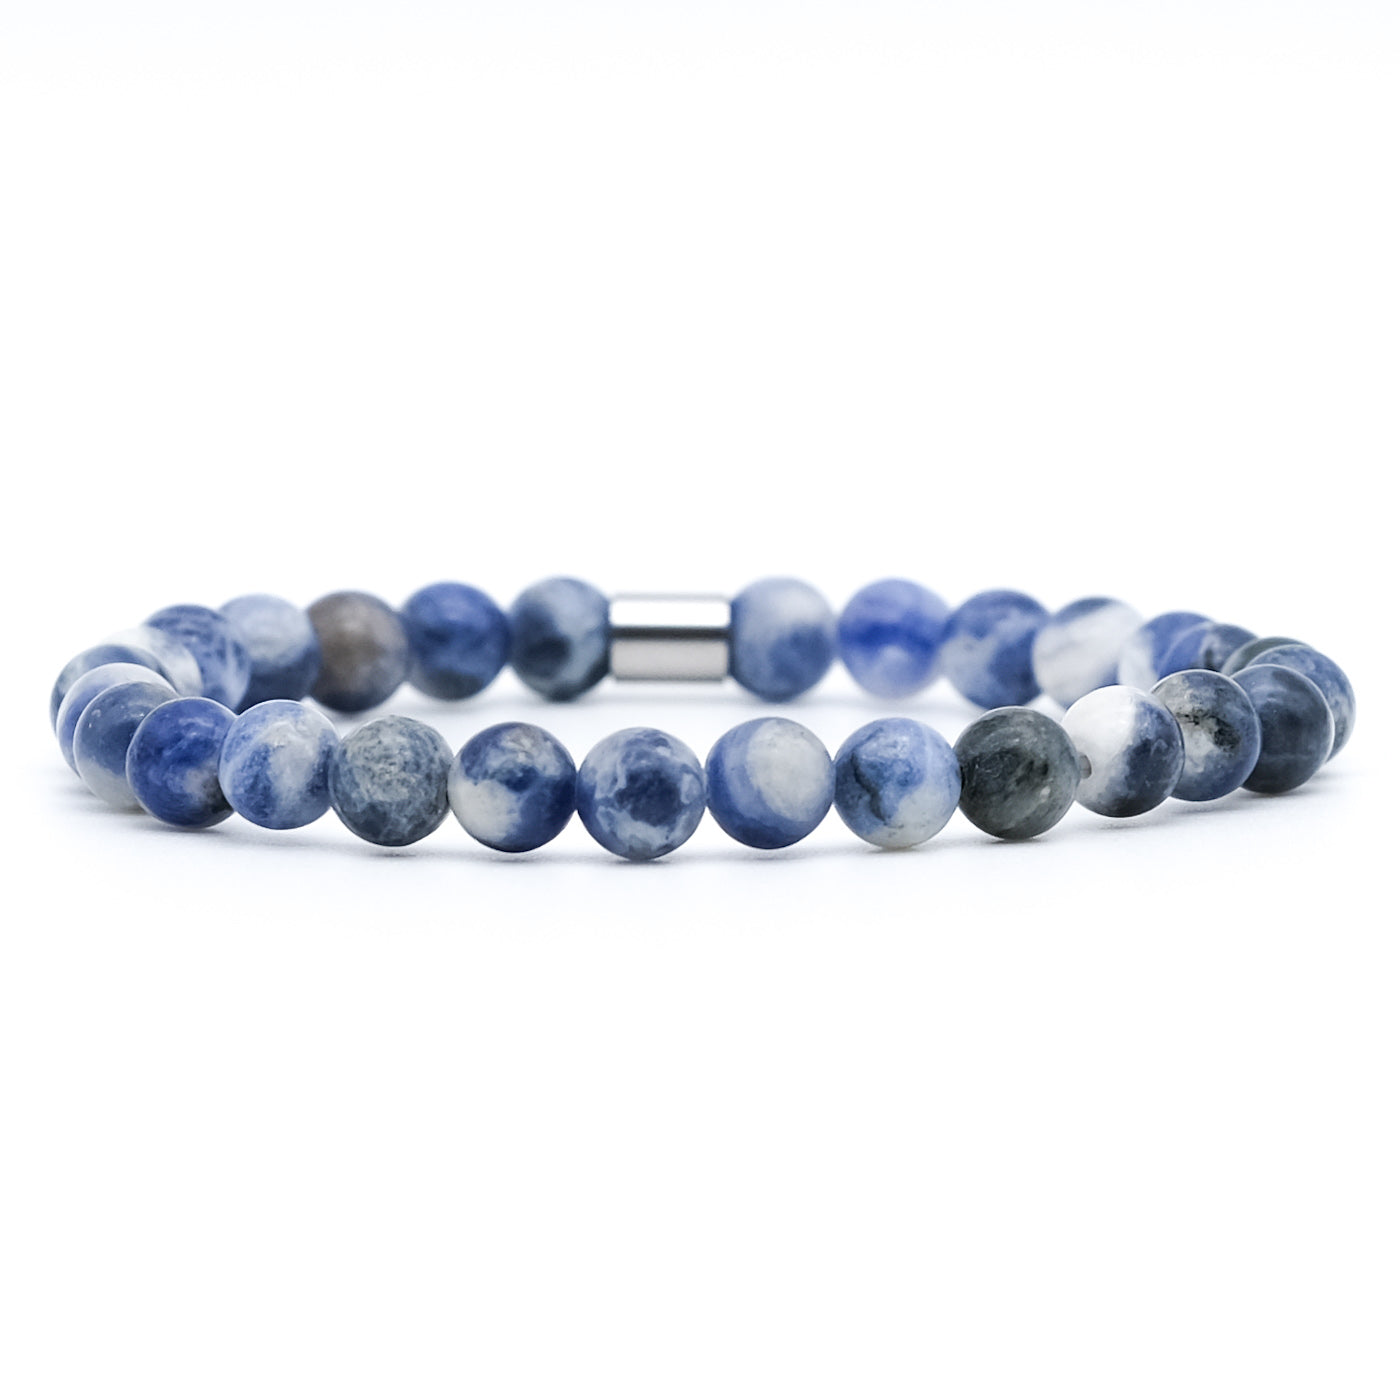 Sodalite gemstone bracelet in 6mm beads with steel accessory